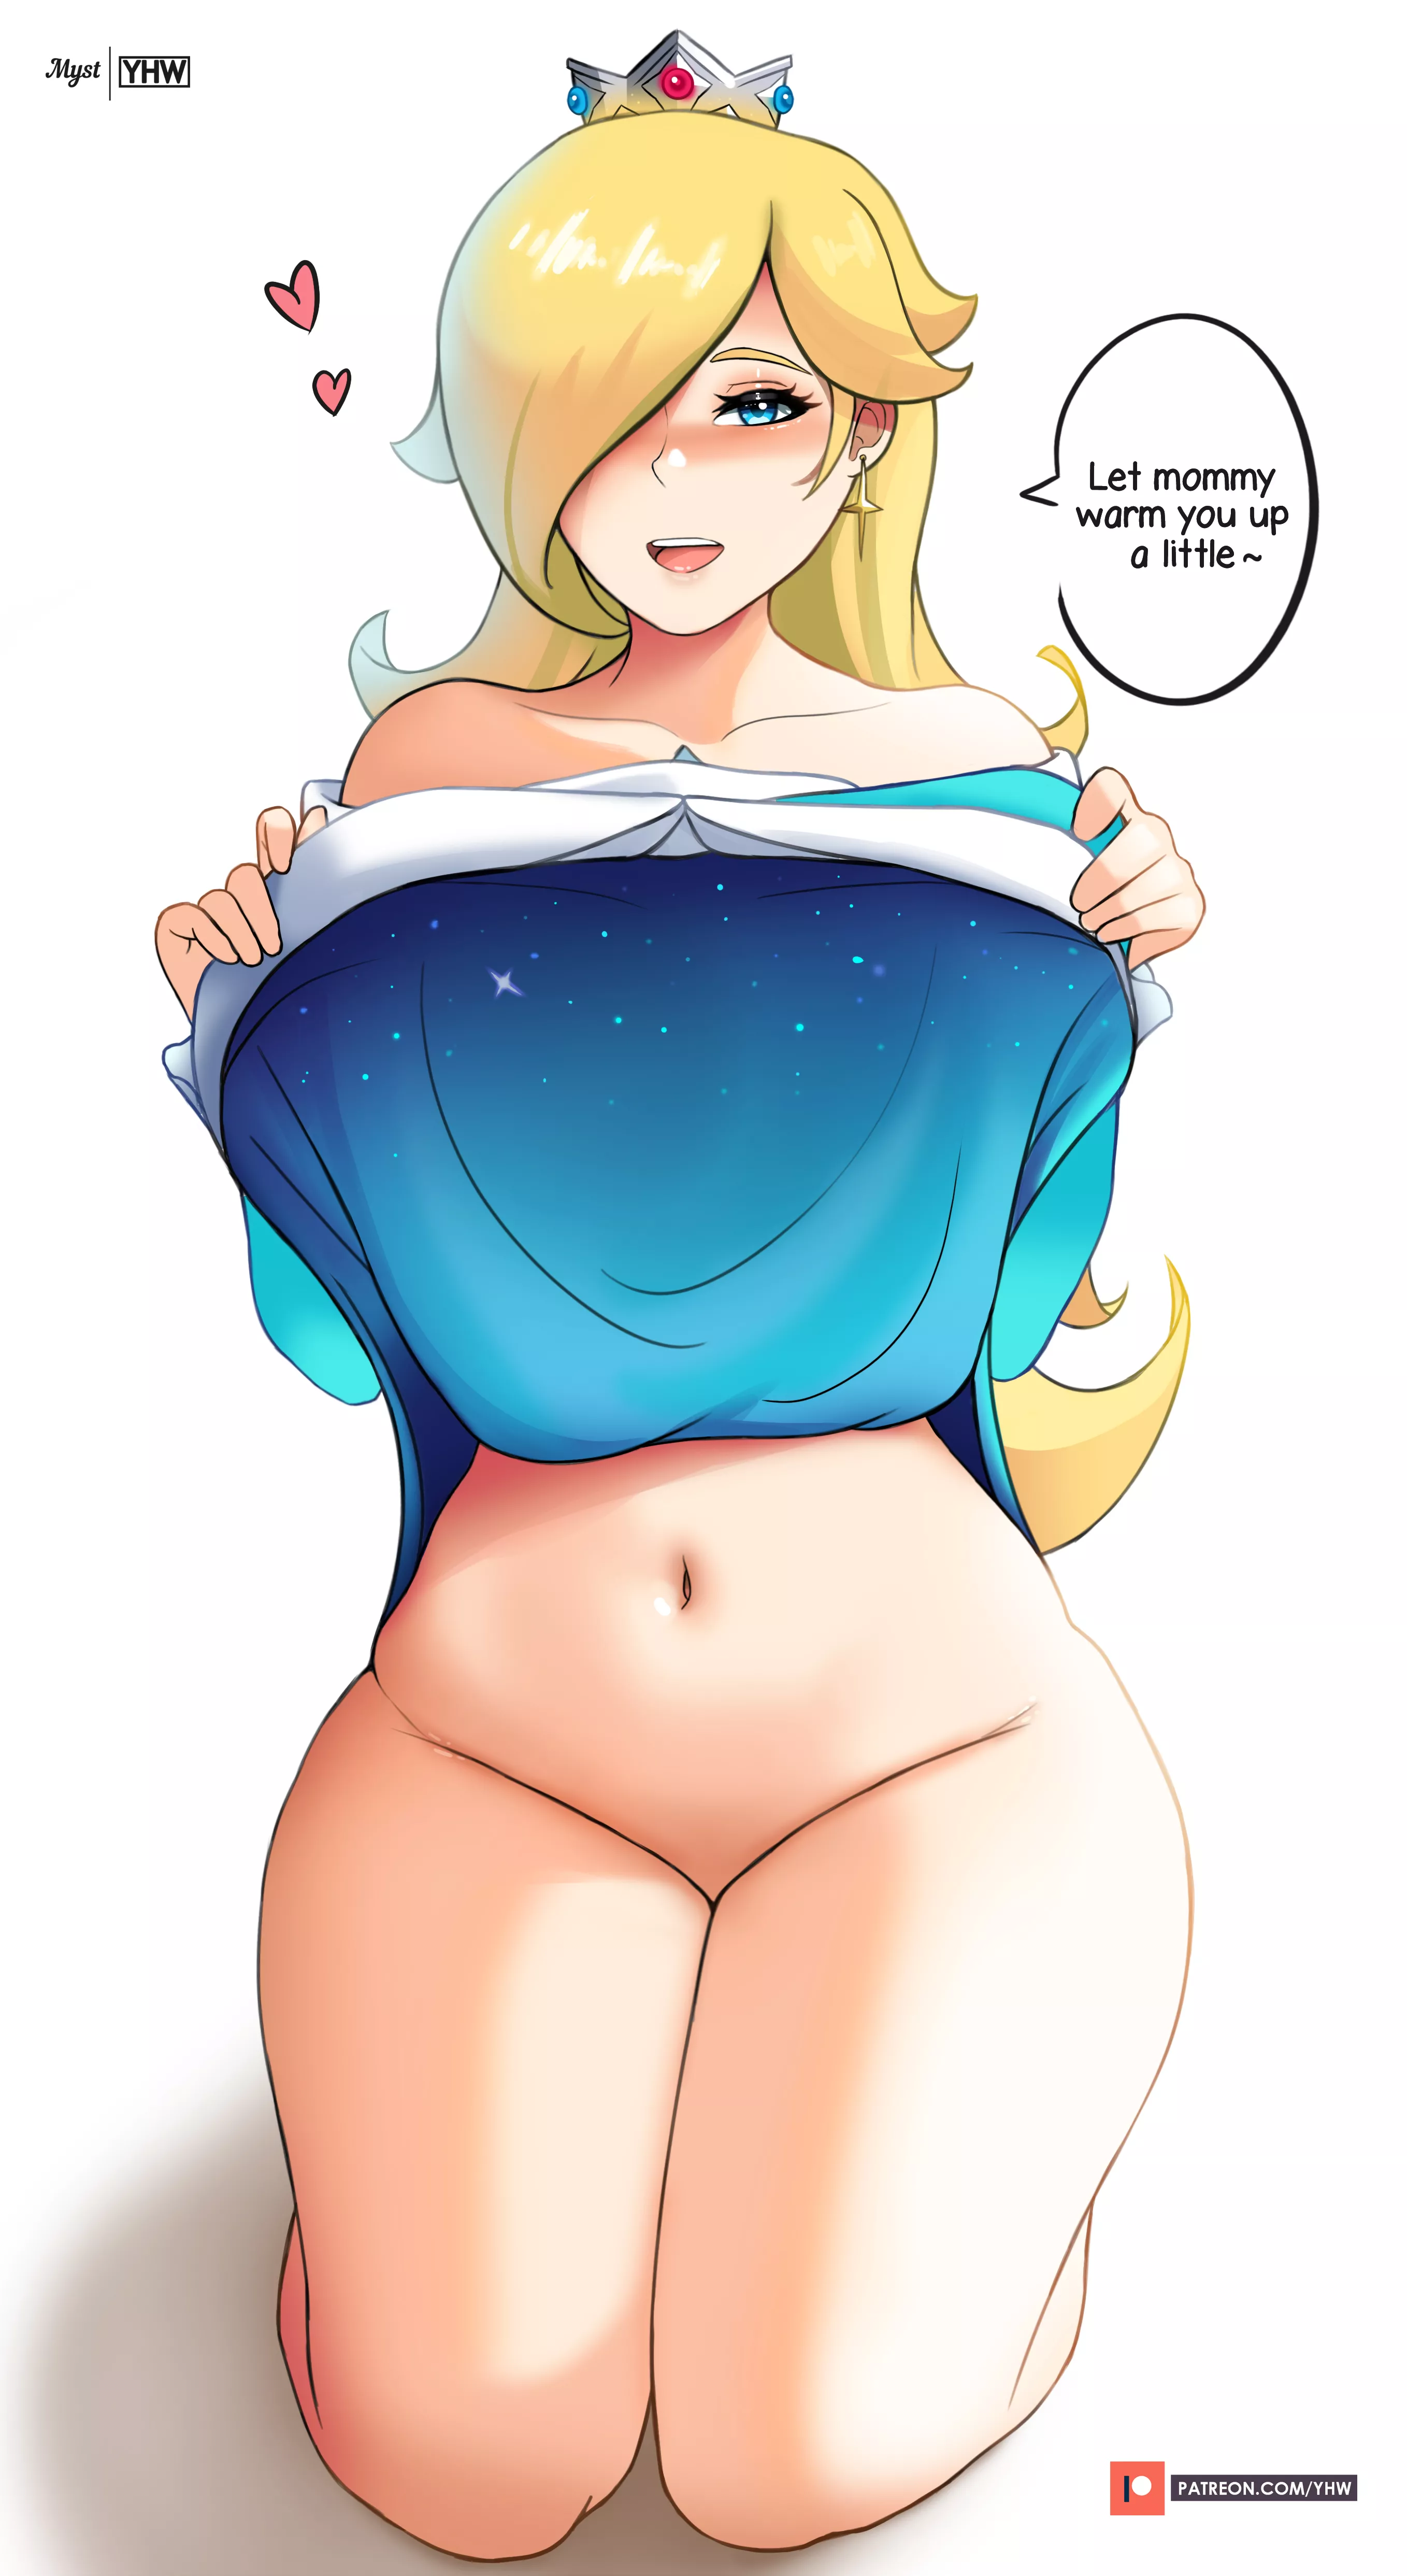 2716px x 4971px - Princess Rosalina (Myst | YHW) [Super Mario Galaxy] nudes by Myst_yhwart